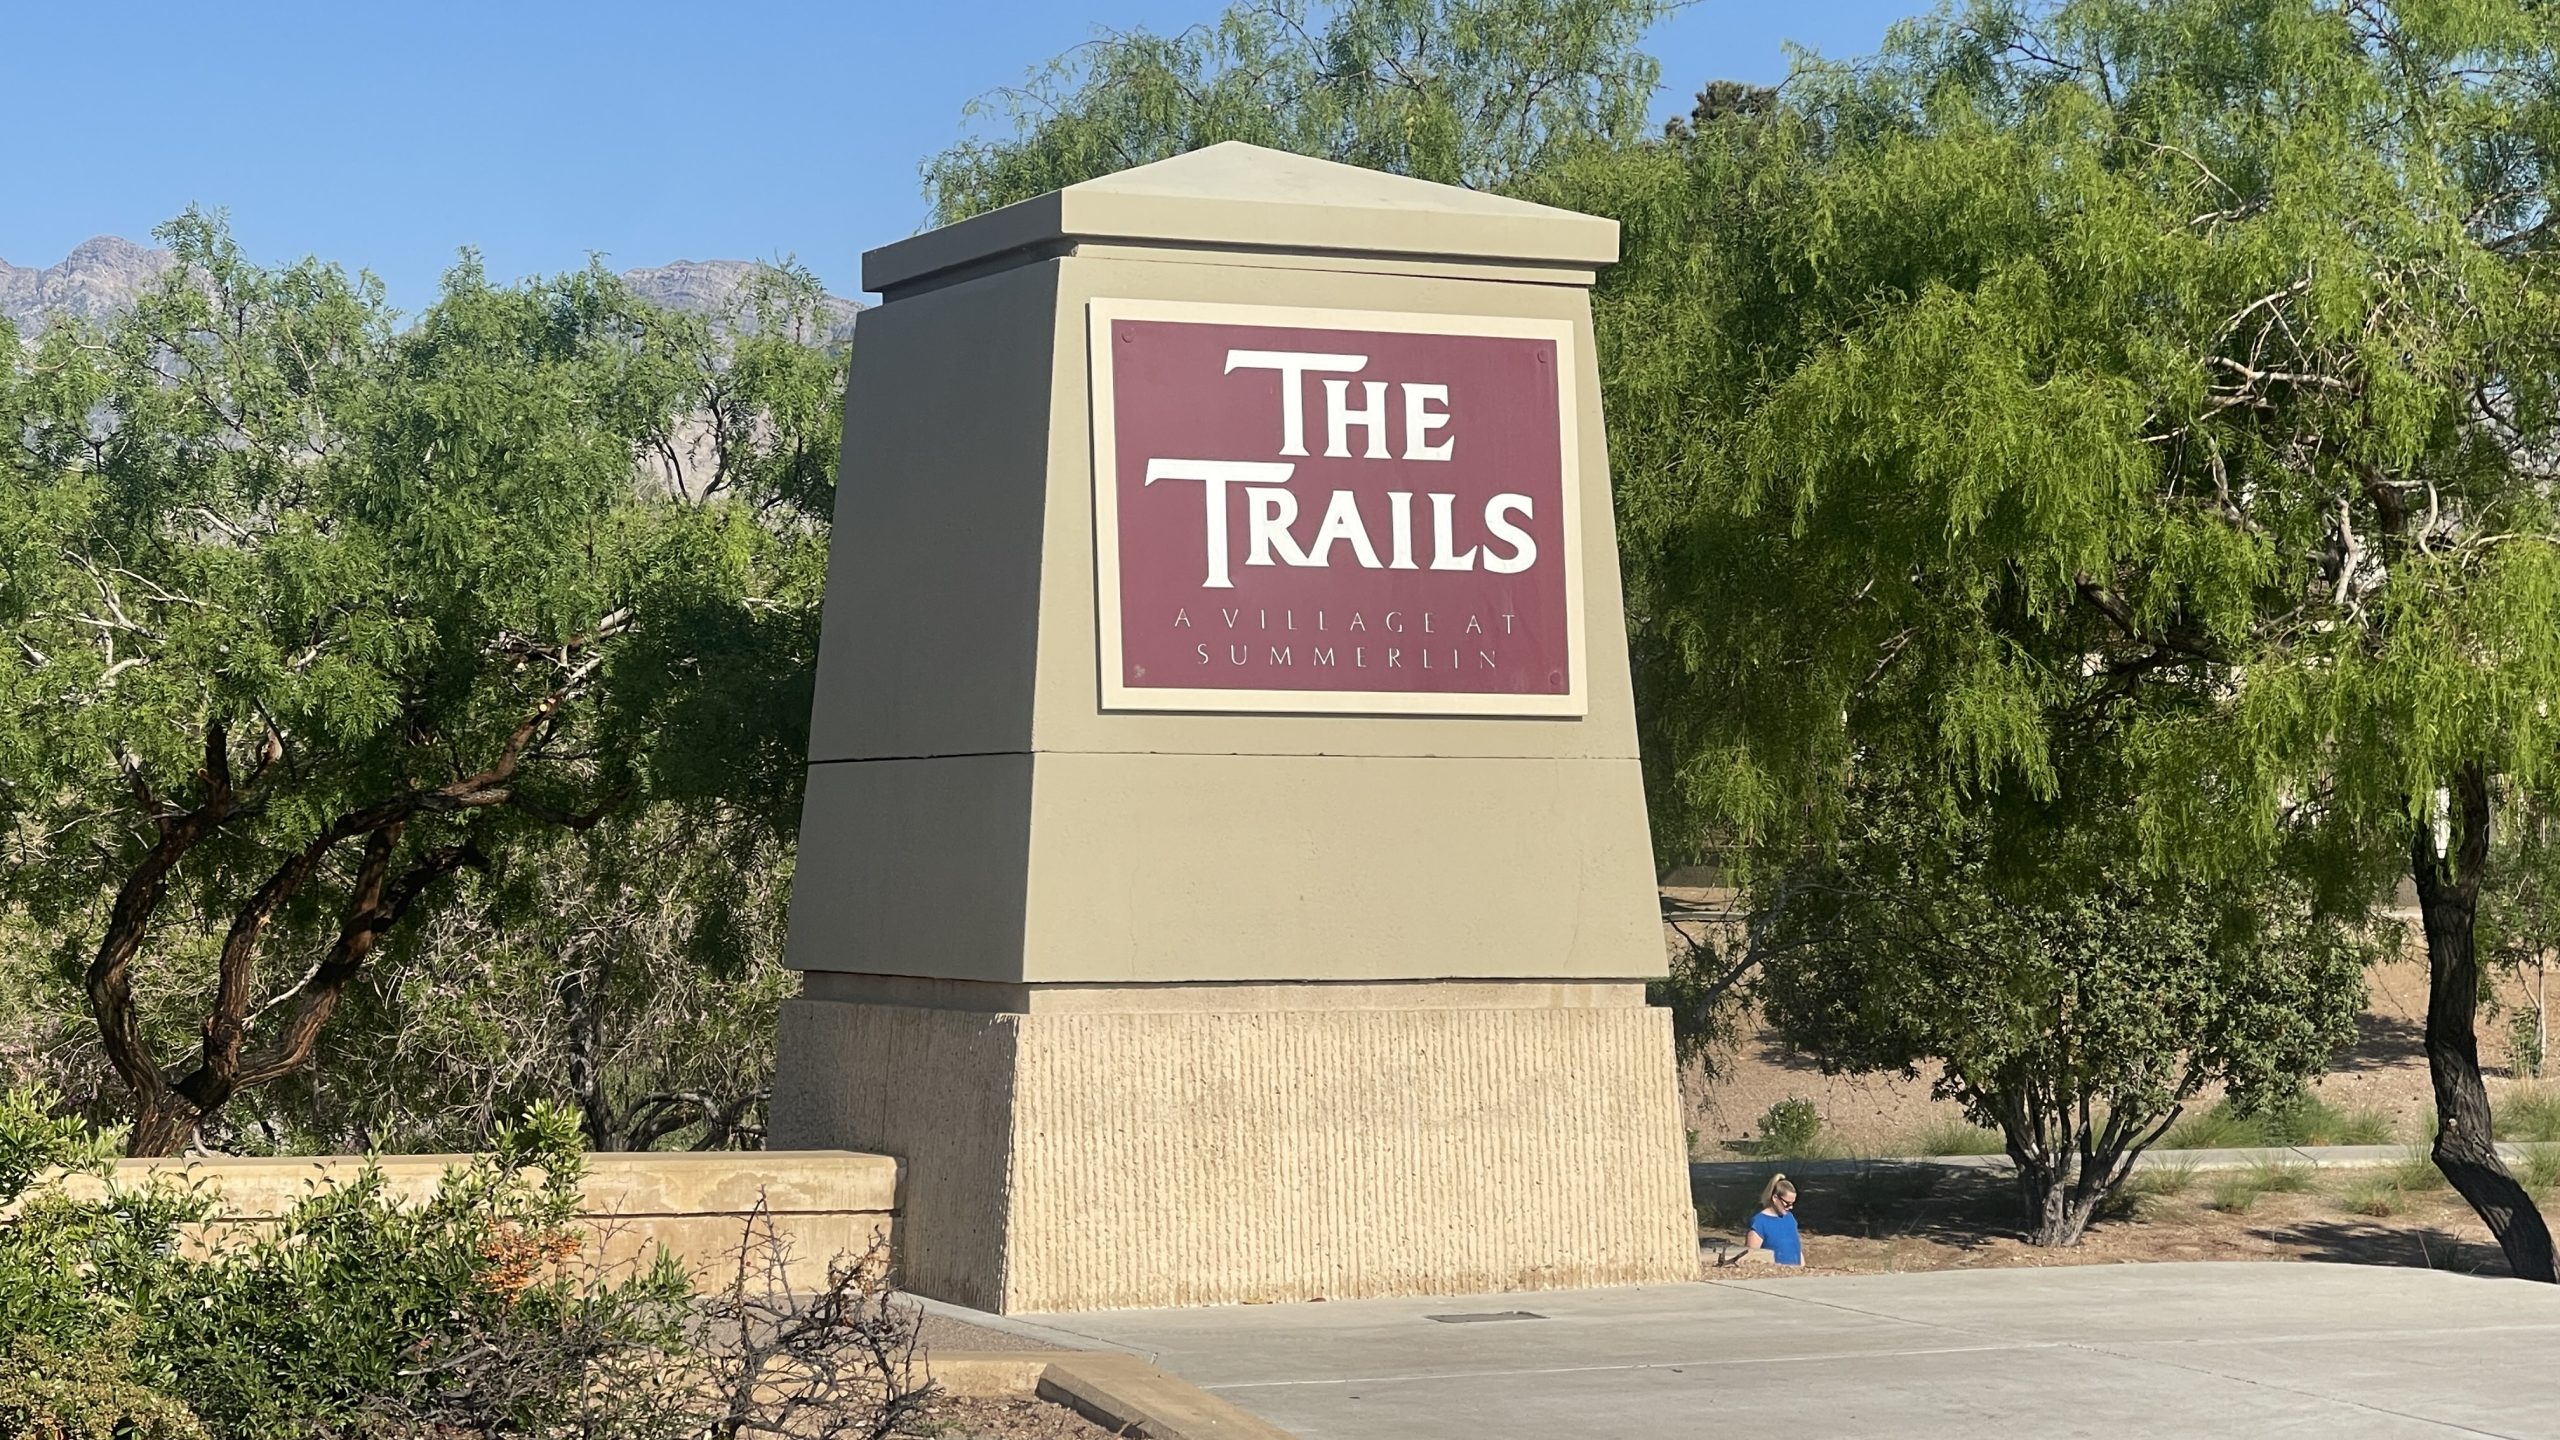 The Trails Park